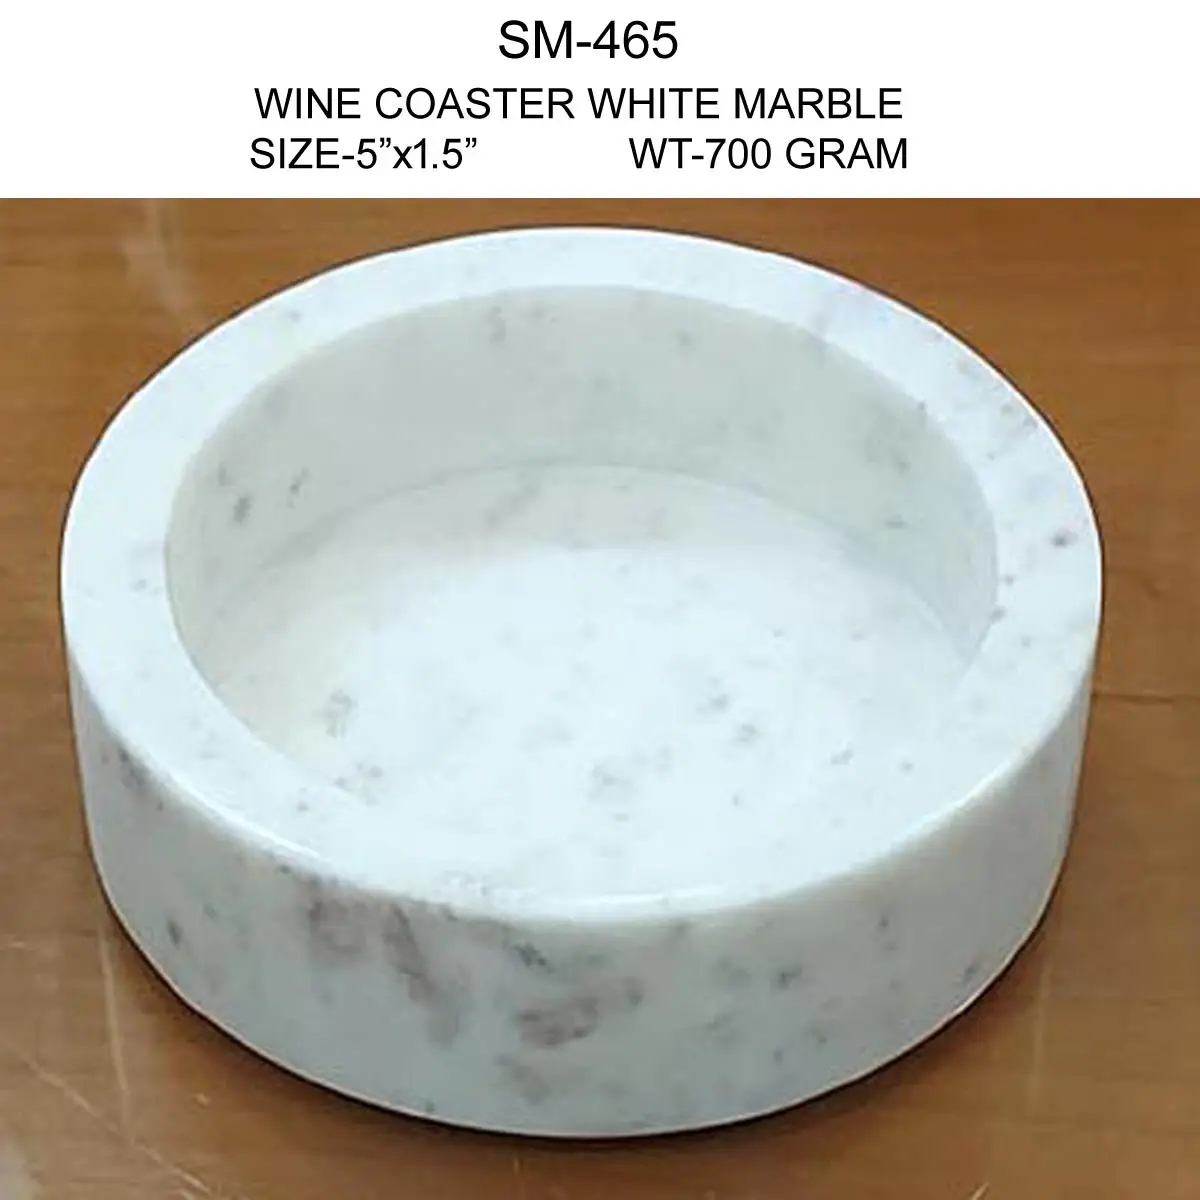 WINE COASTER WHITE MARBLE